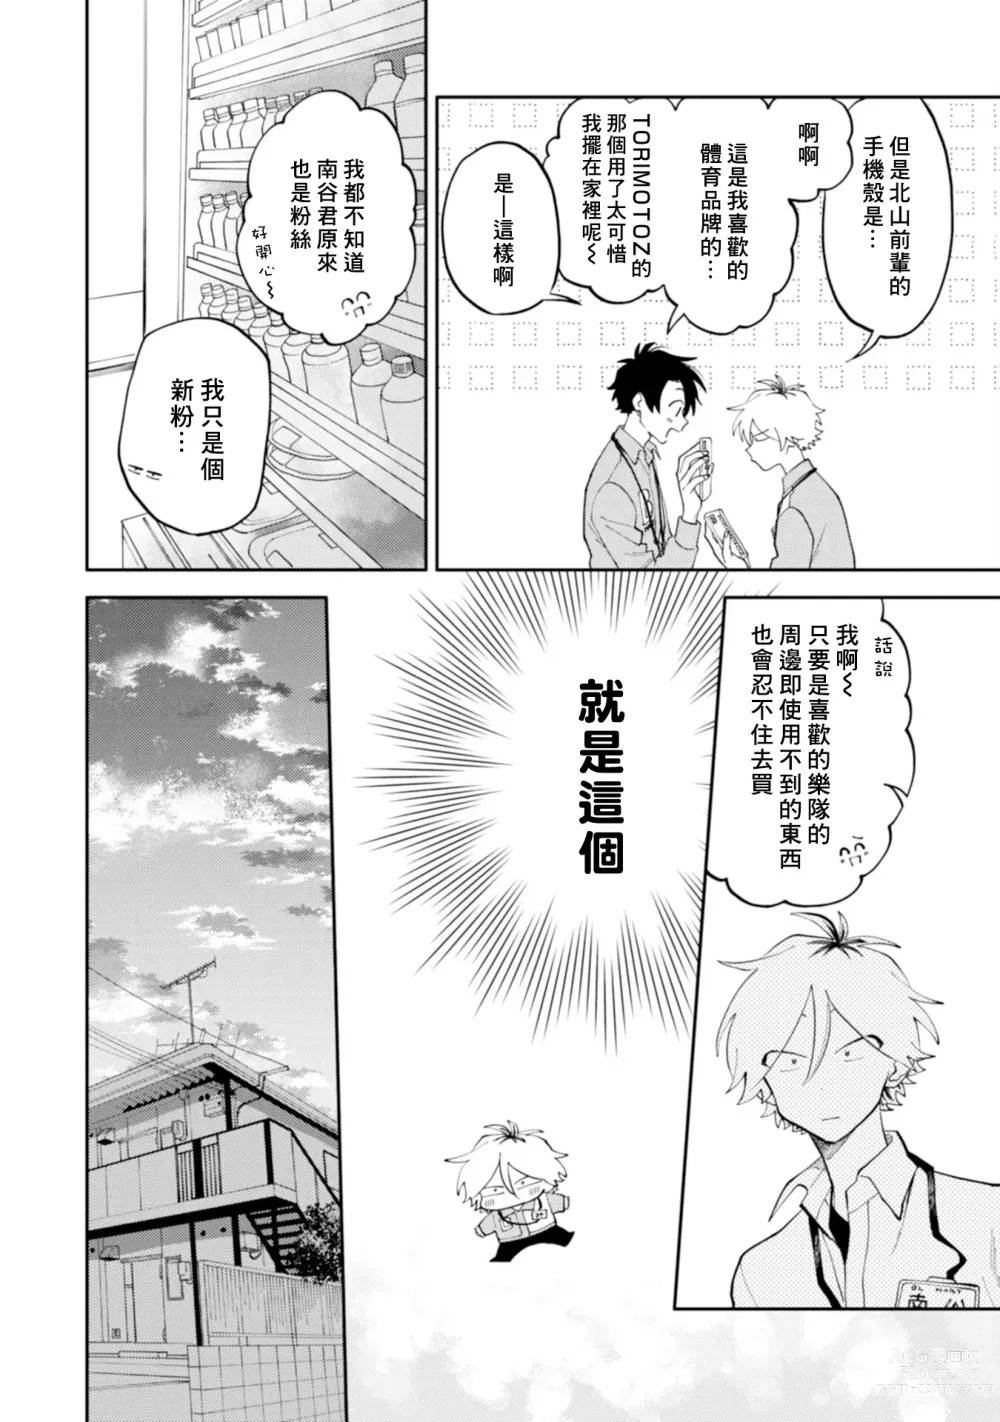 Page 14 of manga 北山君与南谷君